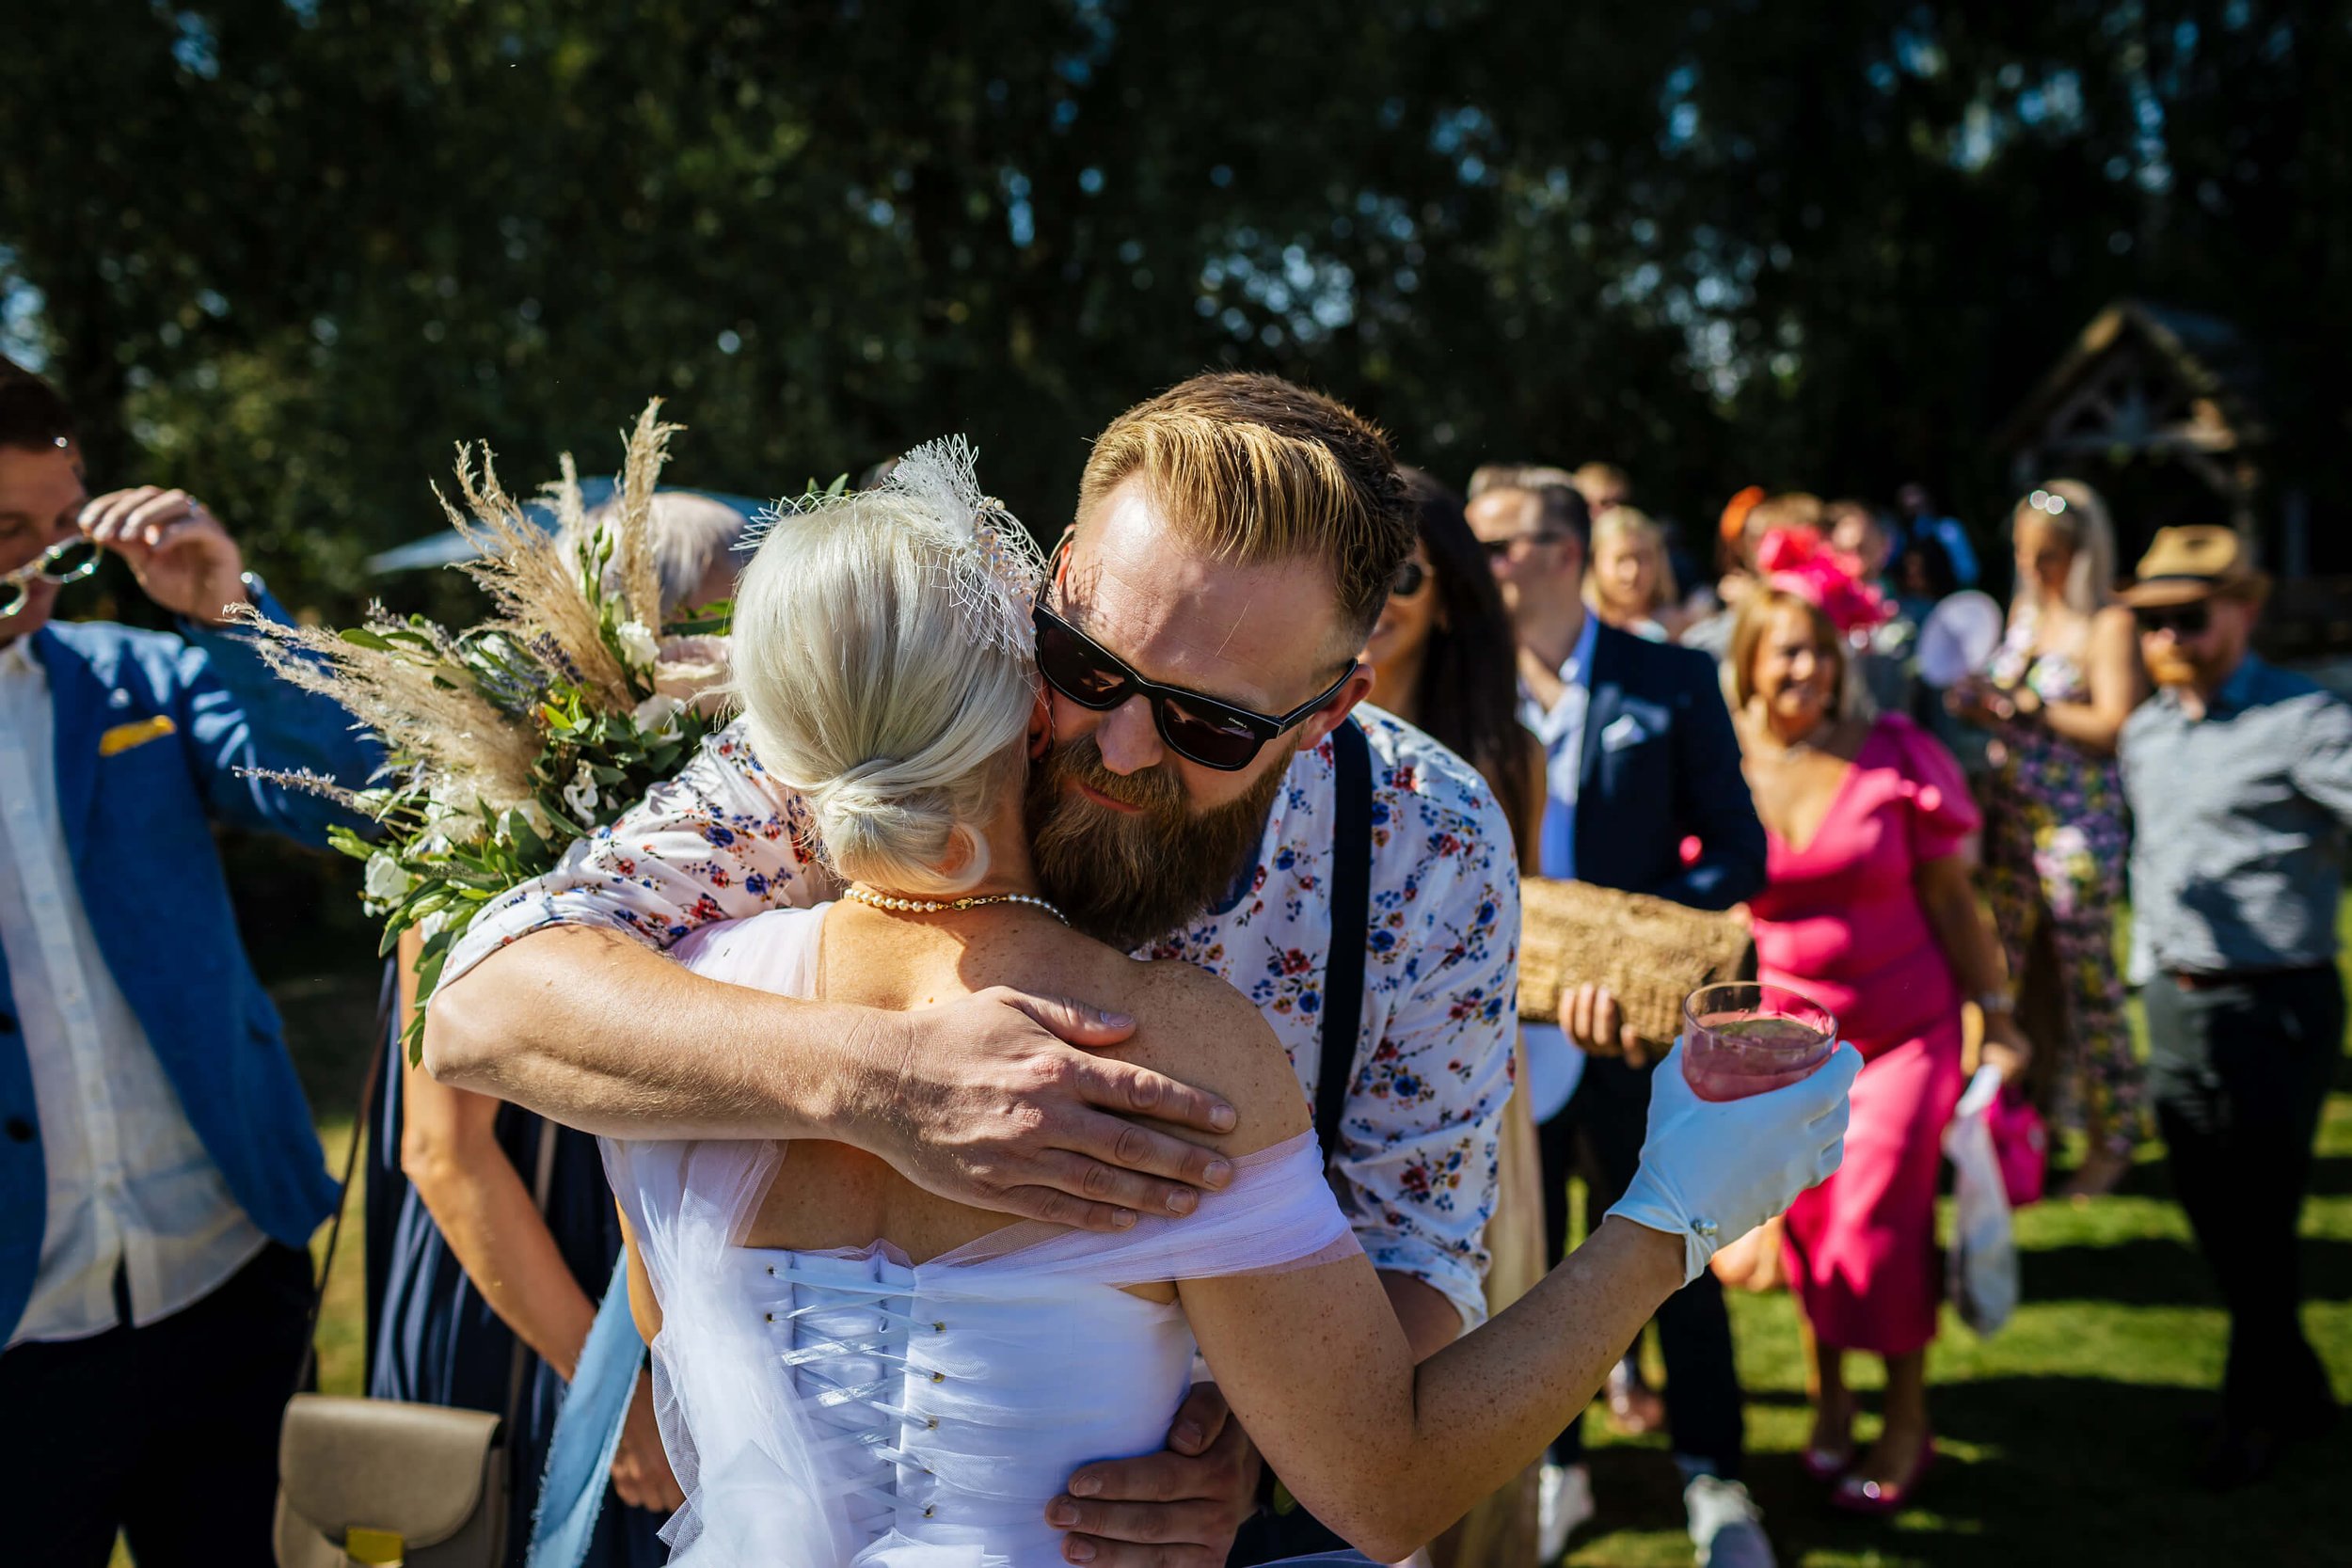 Wedding guest hugs the bride after her wedding ceremony